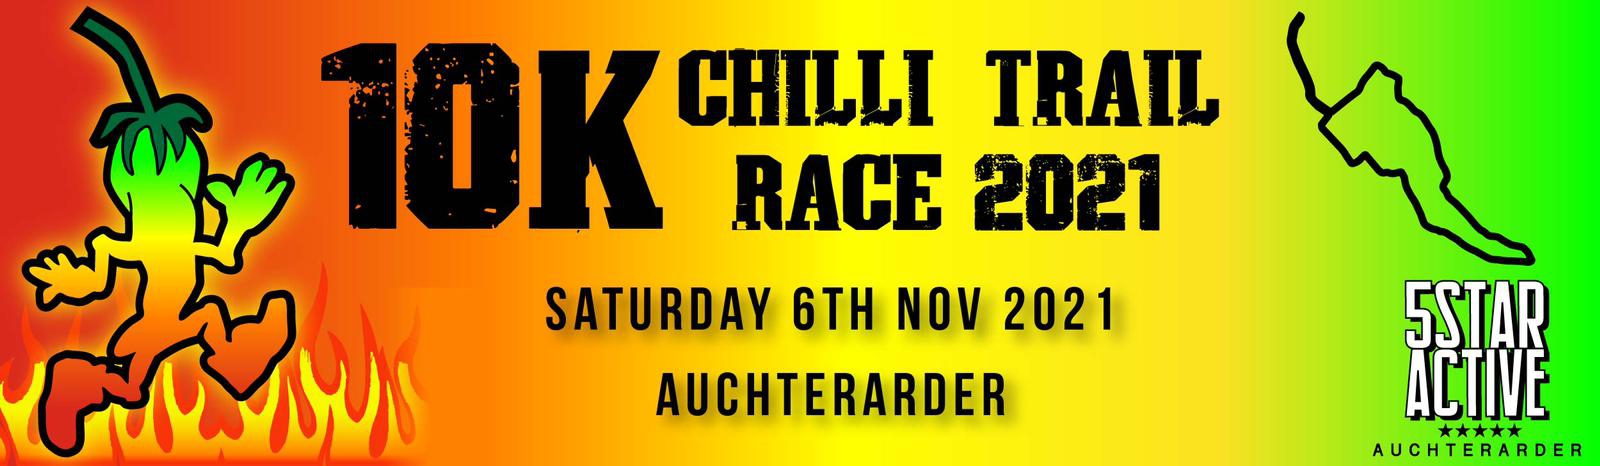 Auchterarder 10K Chilli Trail Race 2021 carousel image 1